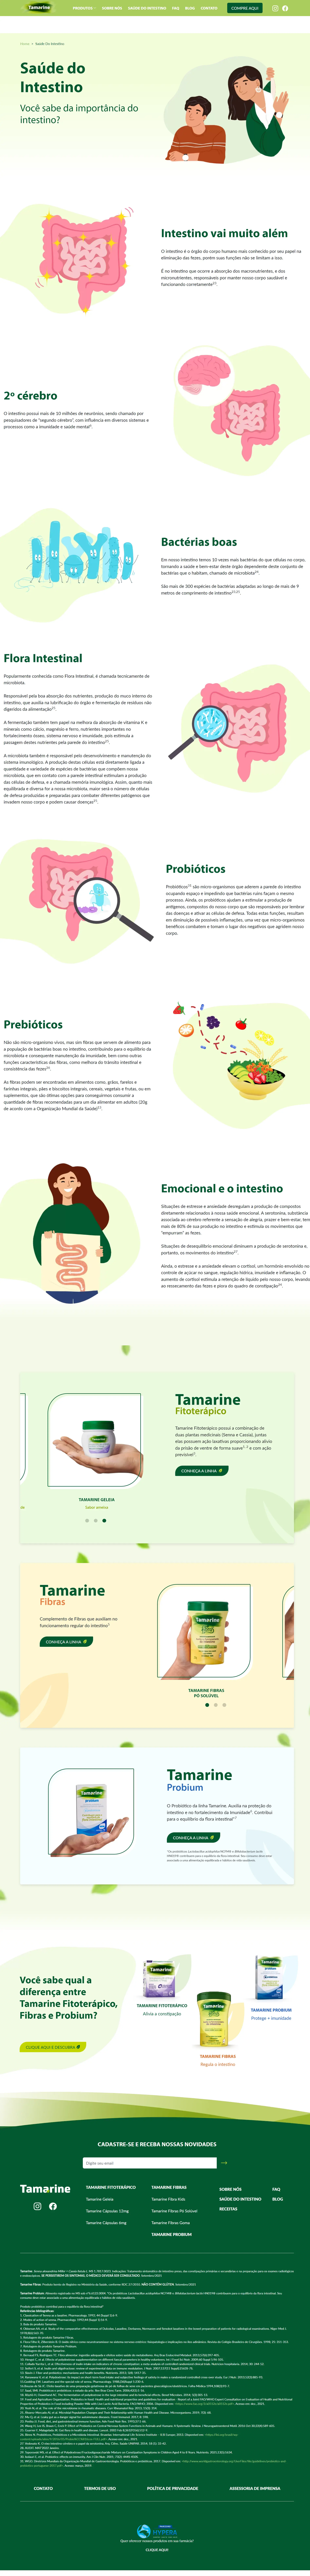 Screenshot of the Gut Health page on Tamarine's website.